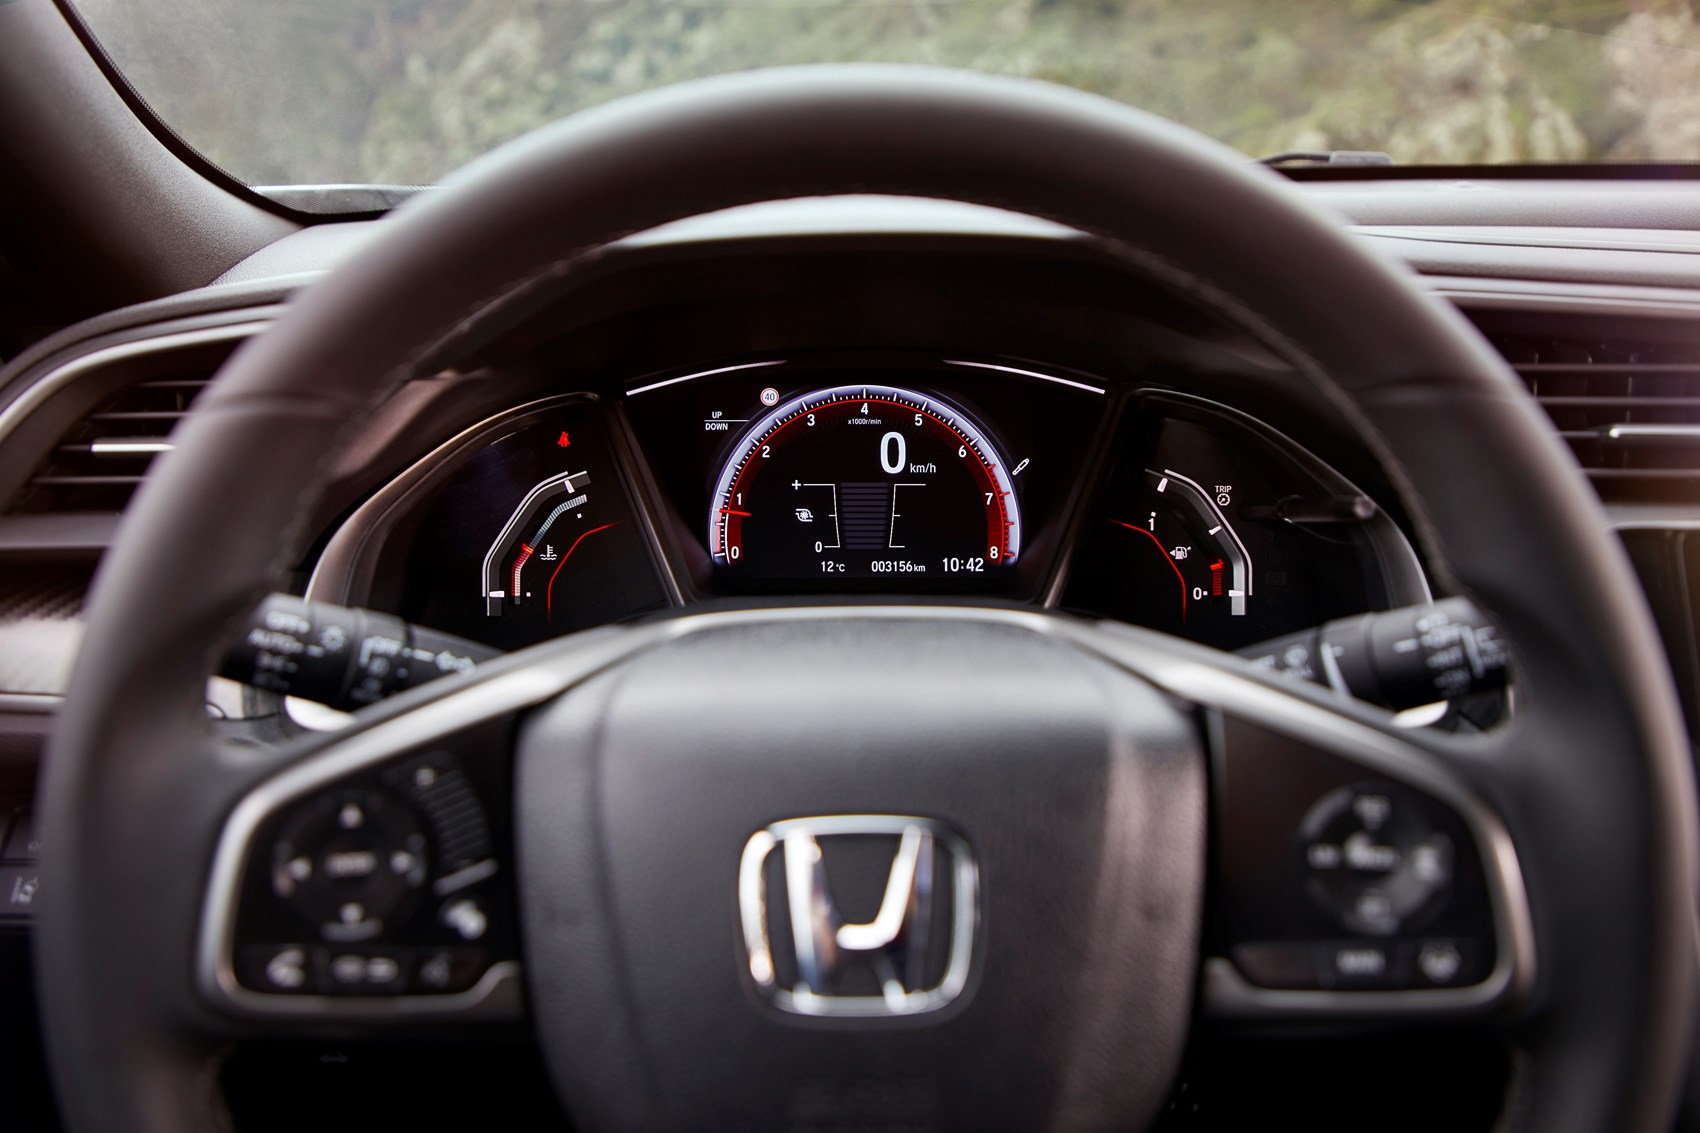 Honda Civic Review 2020 Parkers